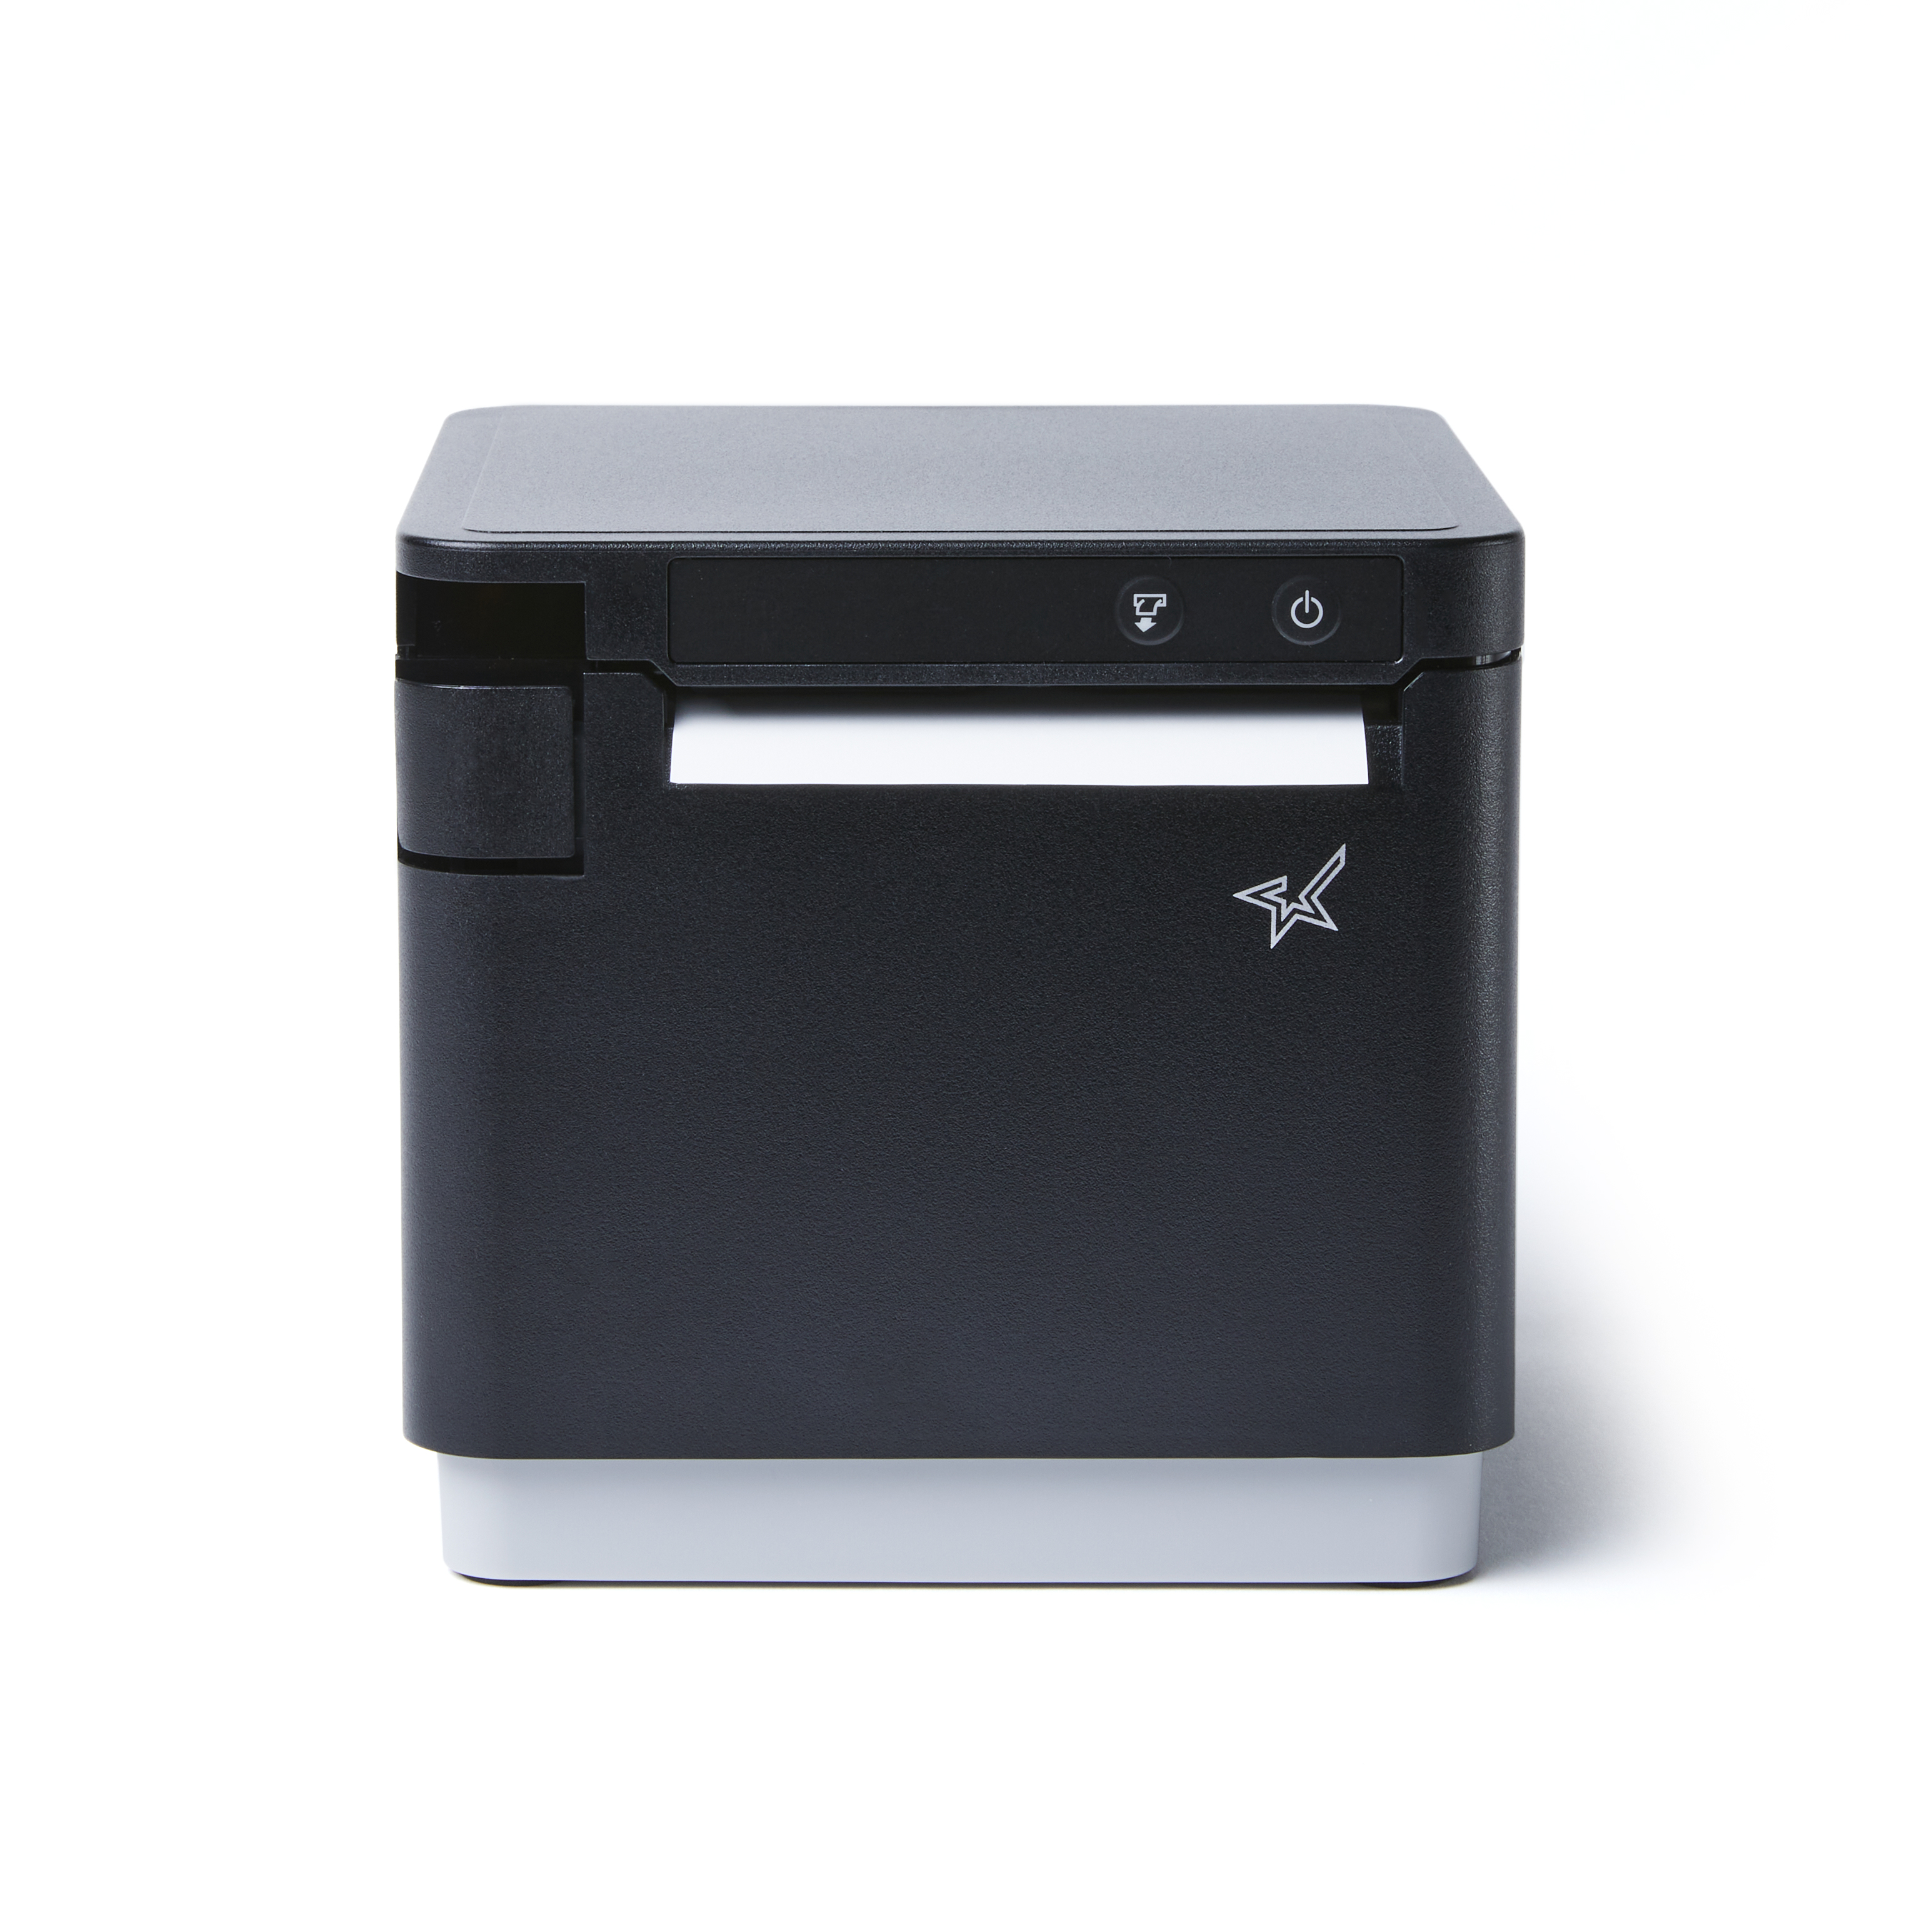 Star mCPrint3 printer